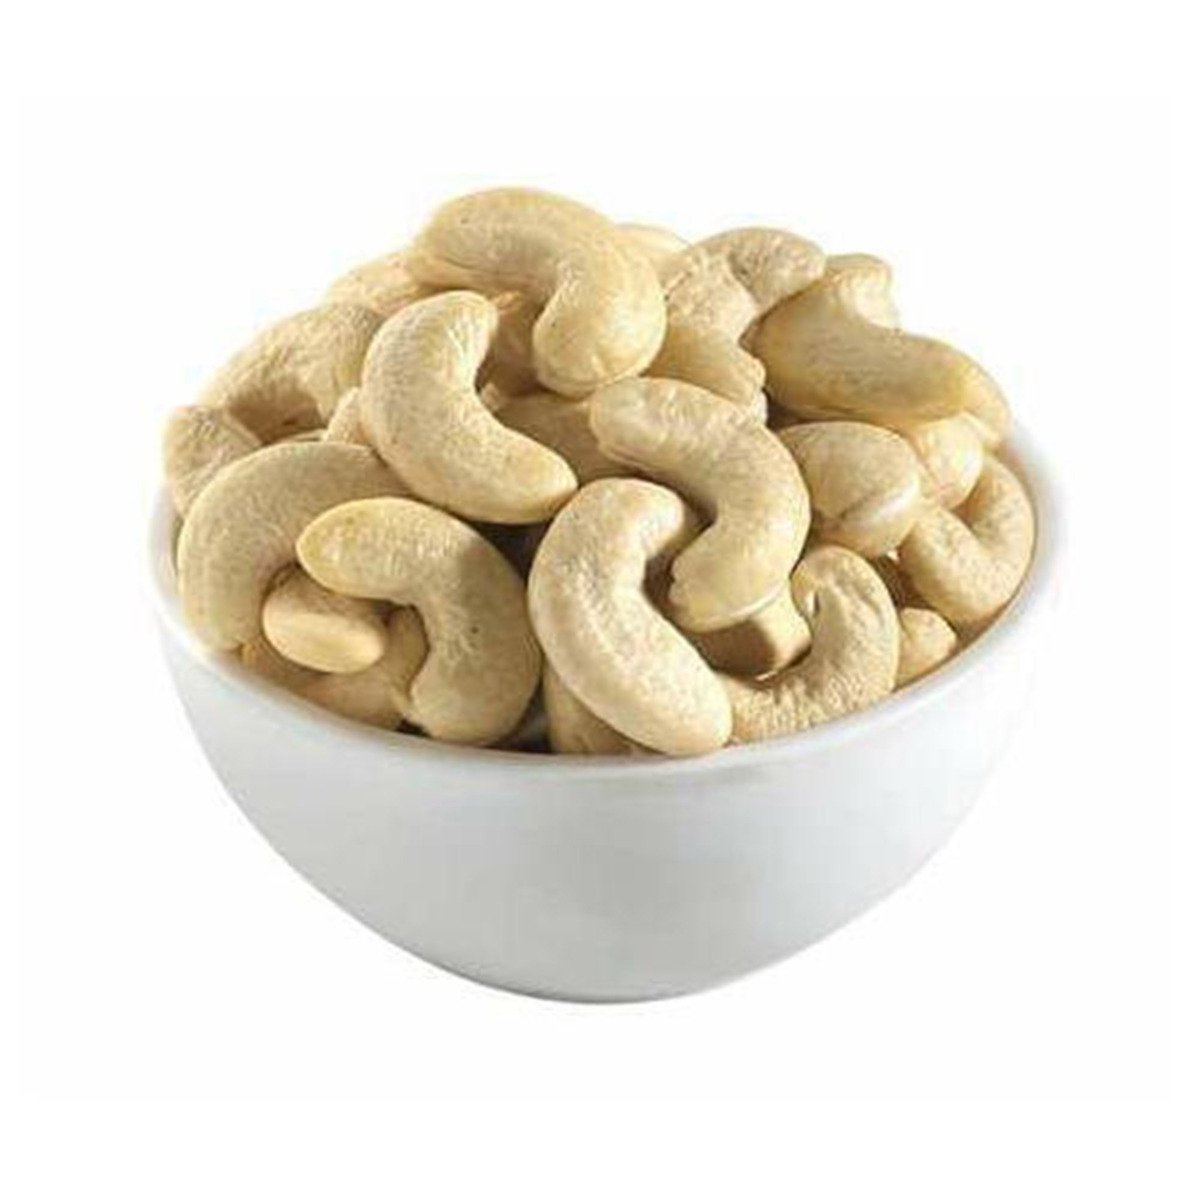 Cashew Nuts W320 India 500g Online At Best Price Roastery Nuts Lulu Ksa 